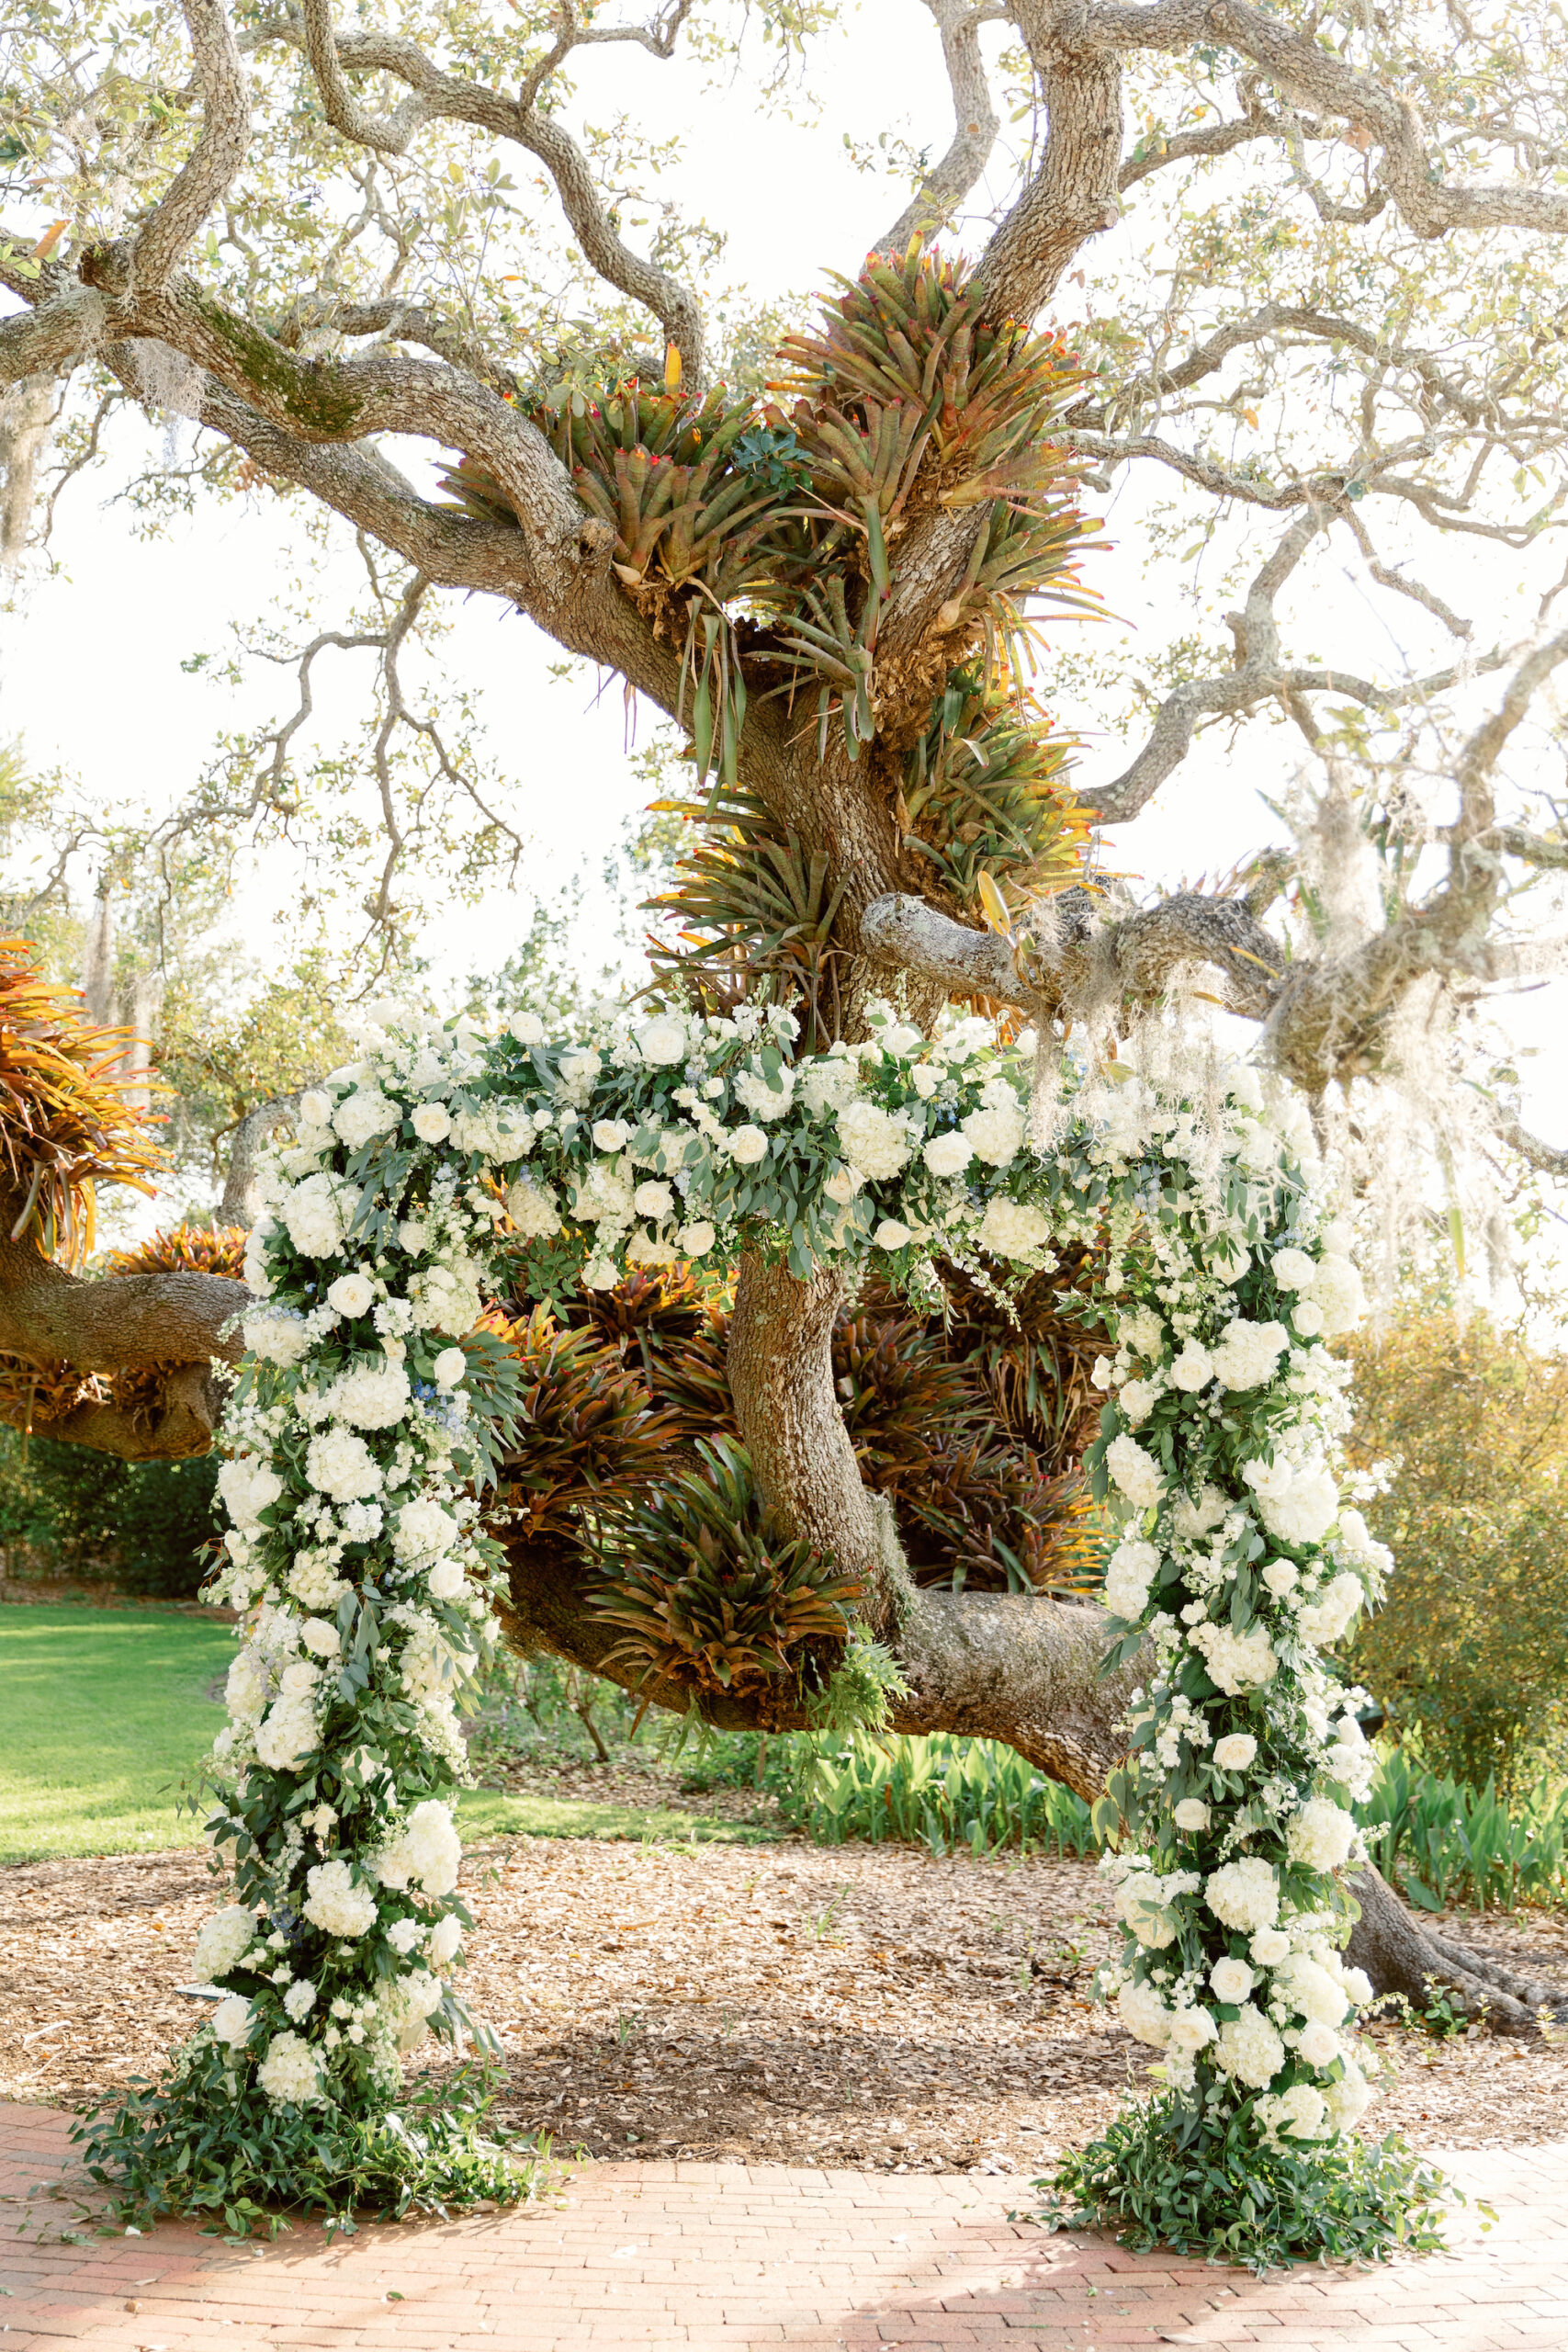 Outdoor Nature Inspired Spring Wedding Ceremony | White and Greenery Floral Arch | Sarasota Florist Botanica International Design Studio